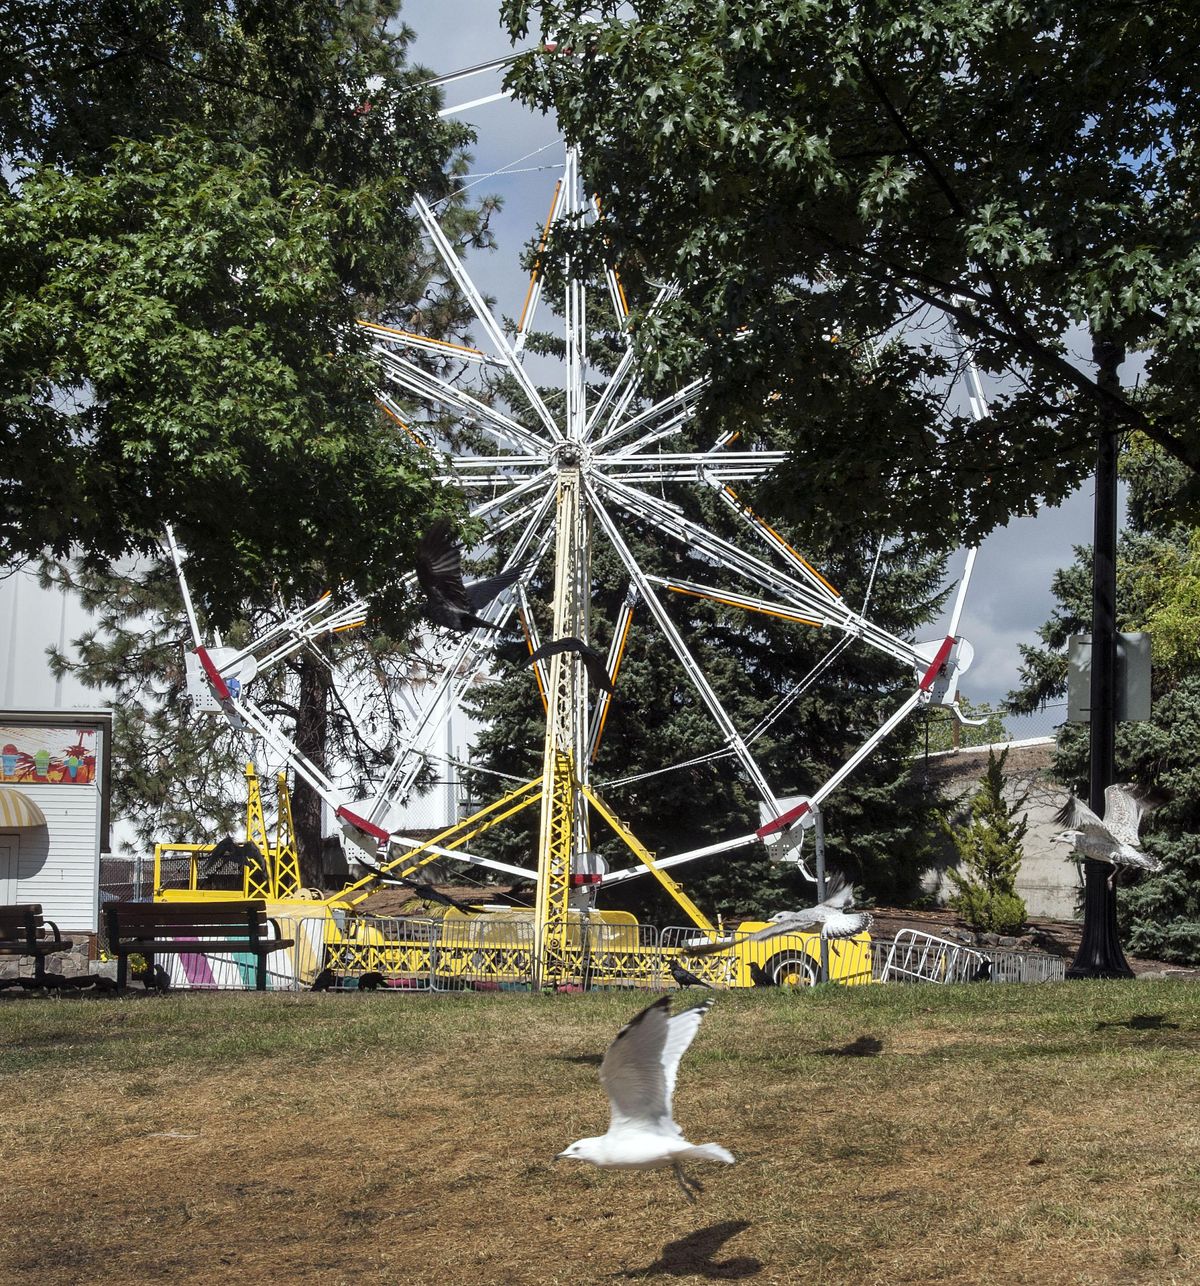 The Ferris Wheel ride at Riverfront Park is seen. (Dan Pelle / The Spokesman-Review)